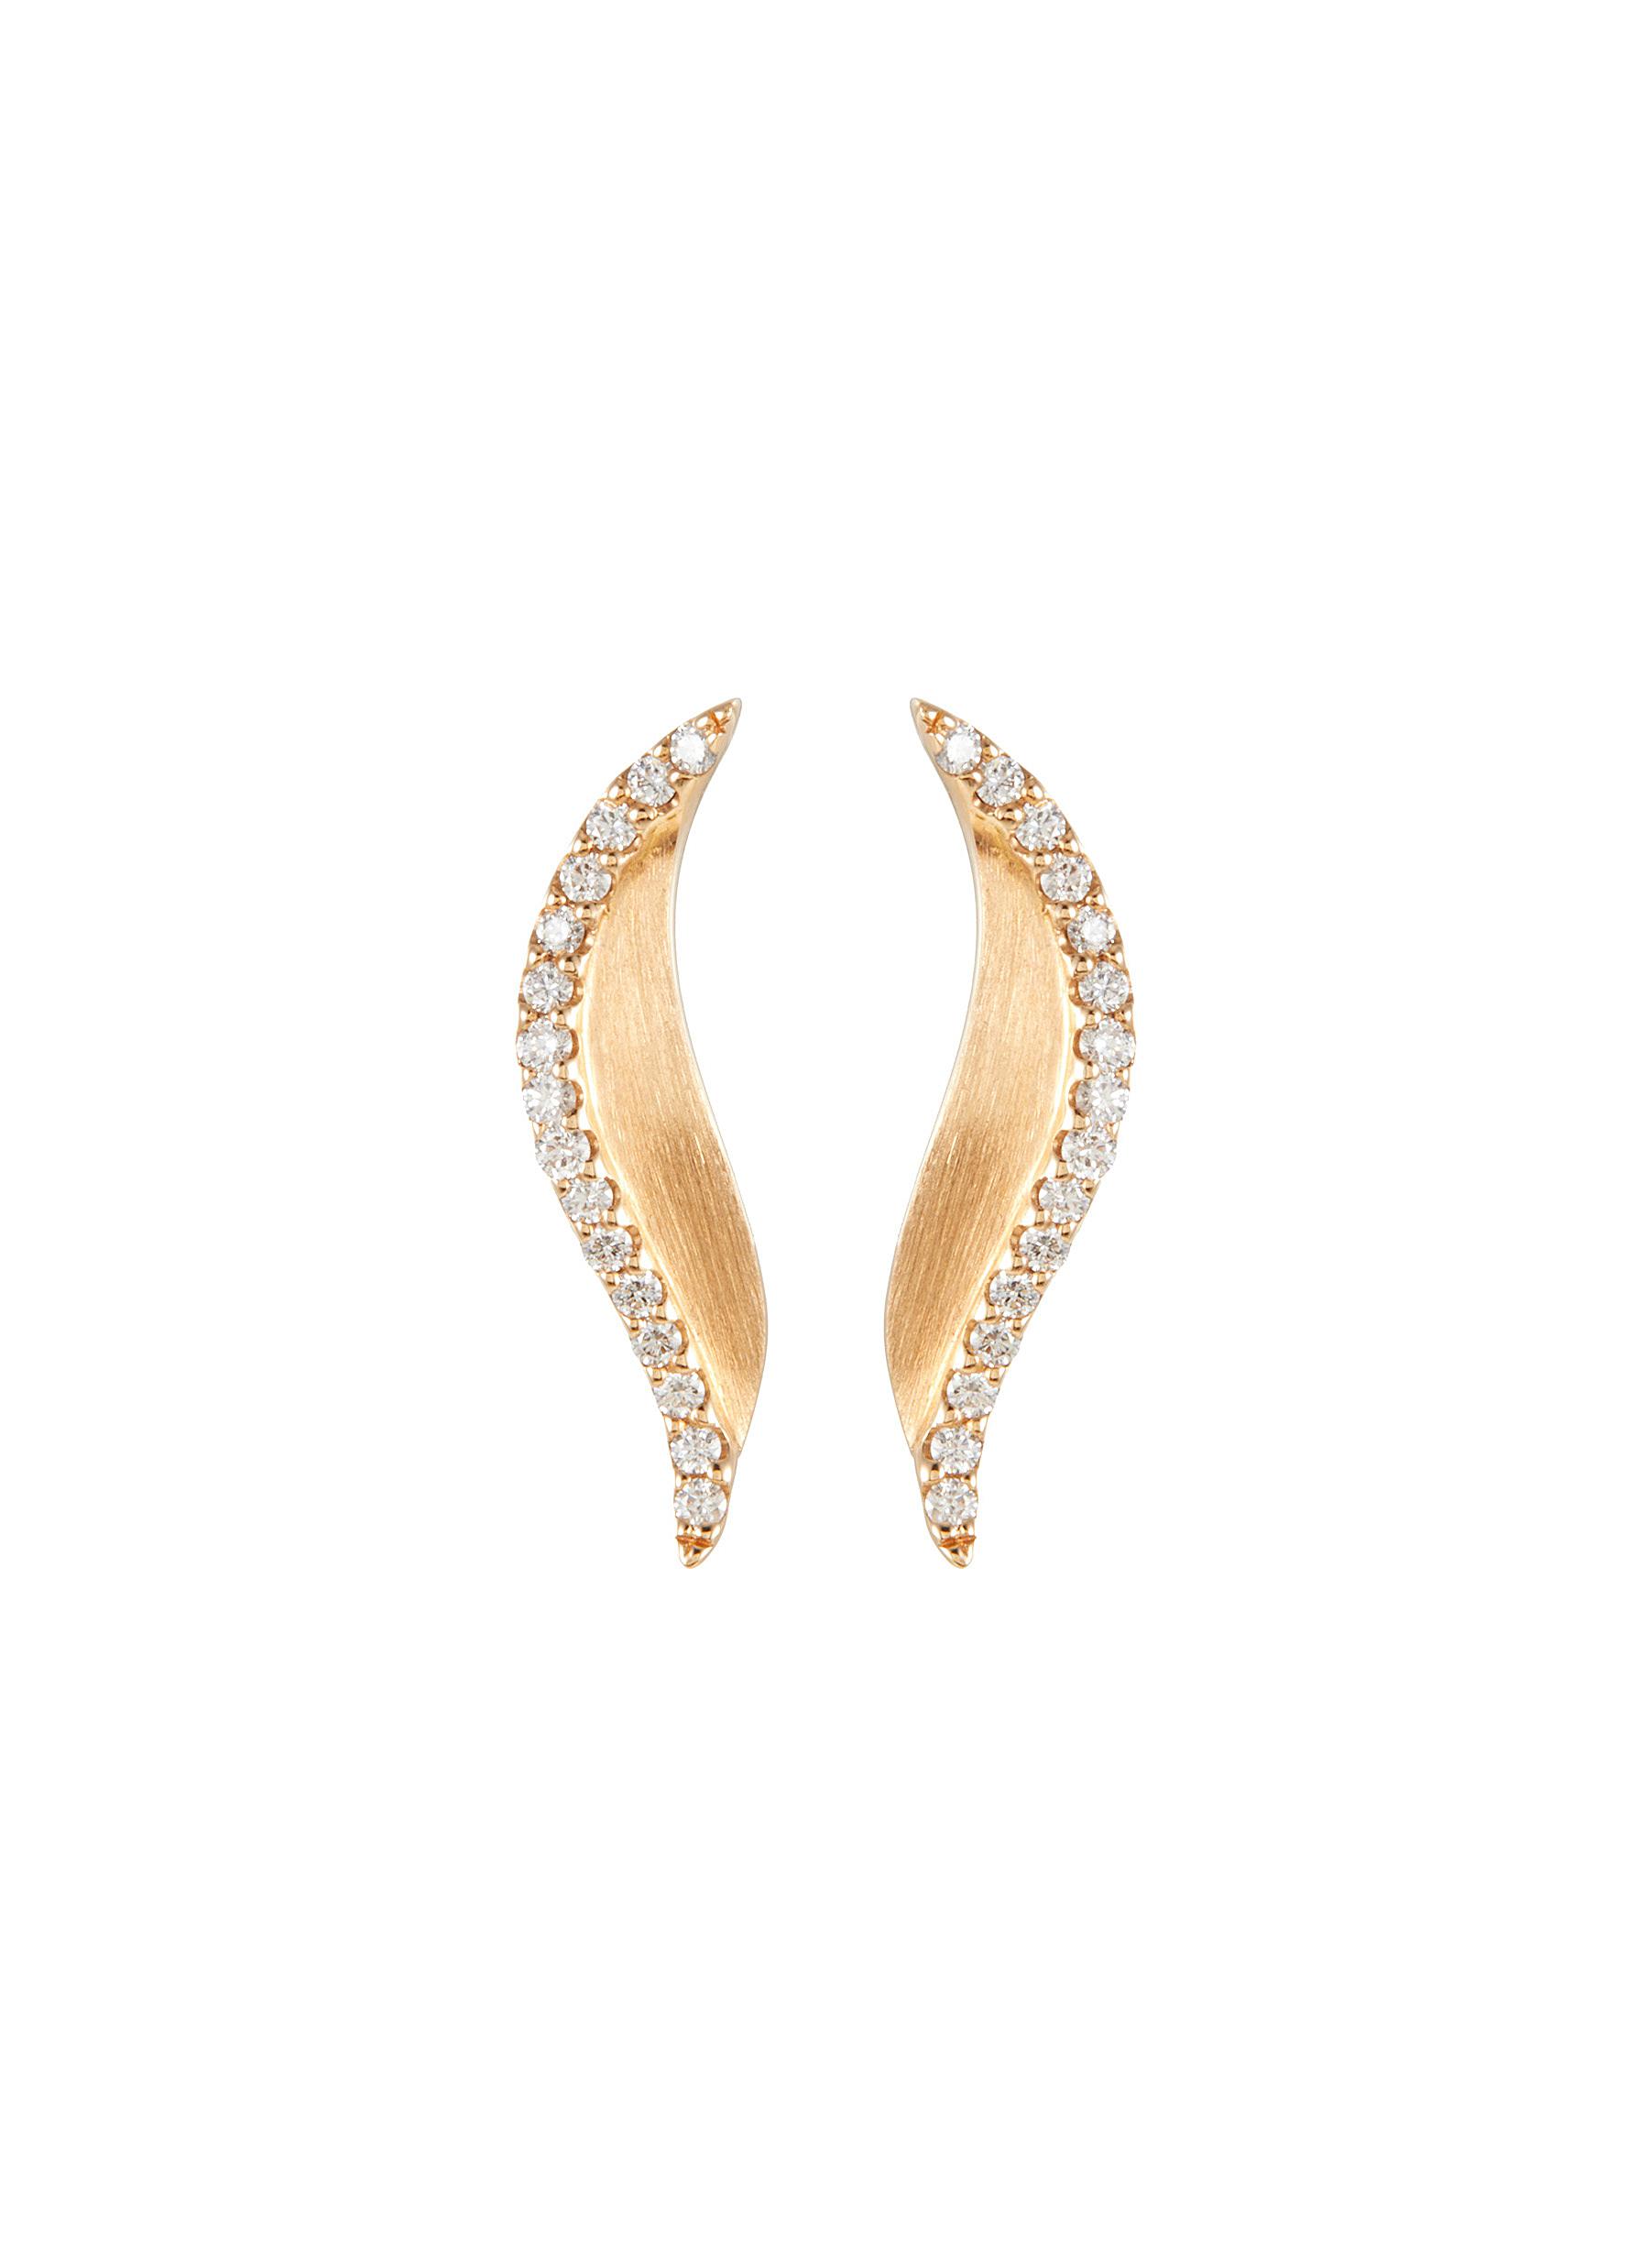 KAVANT & SHARART ‘Talay' Diamond 18K Rose Gold Wave Stud Earrings